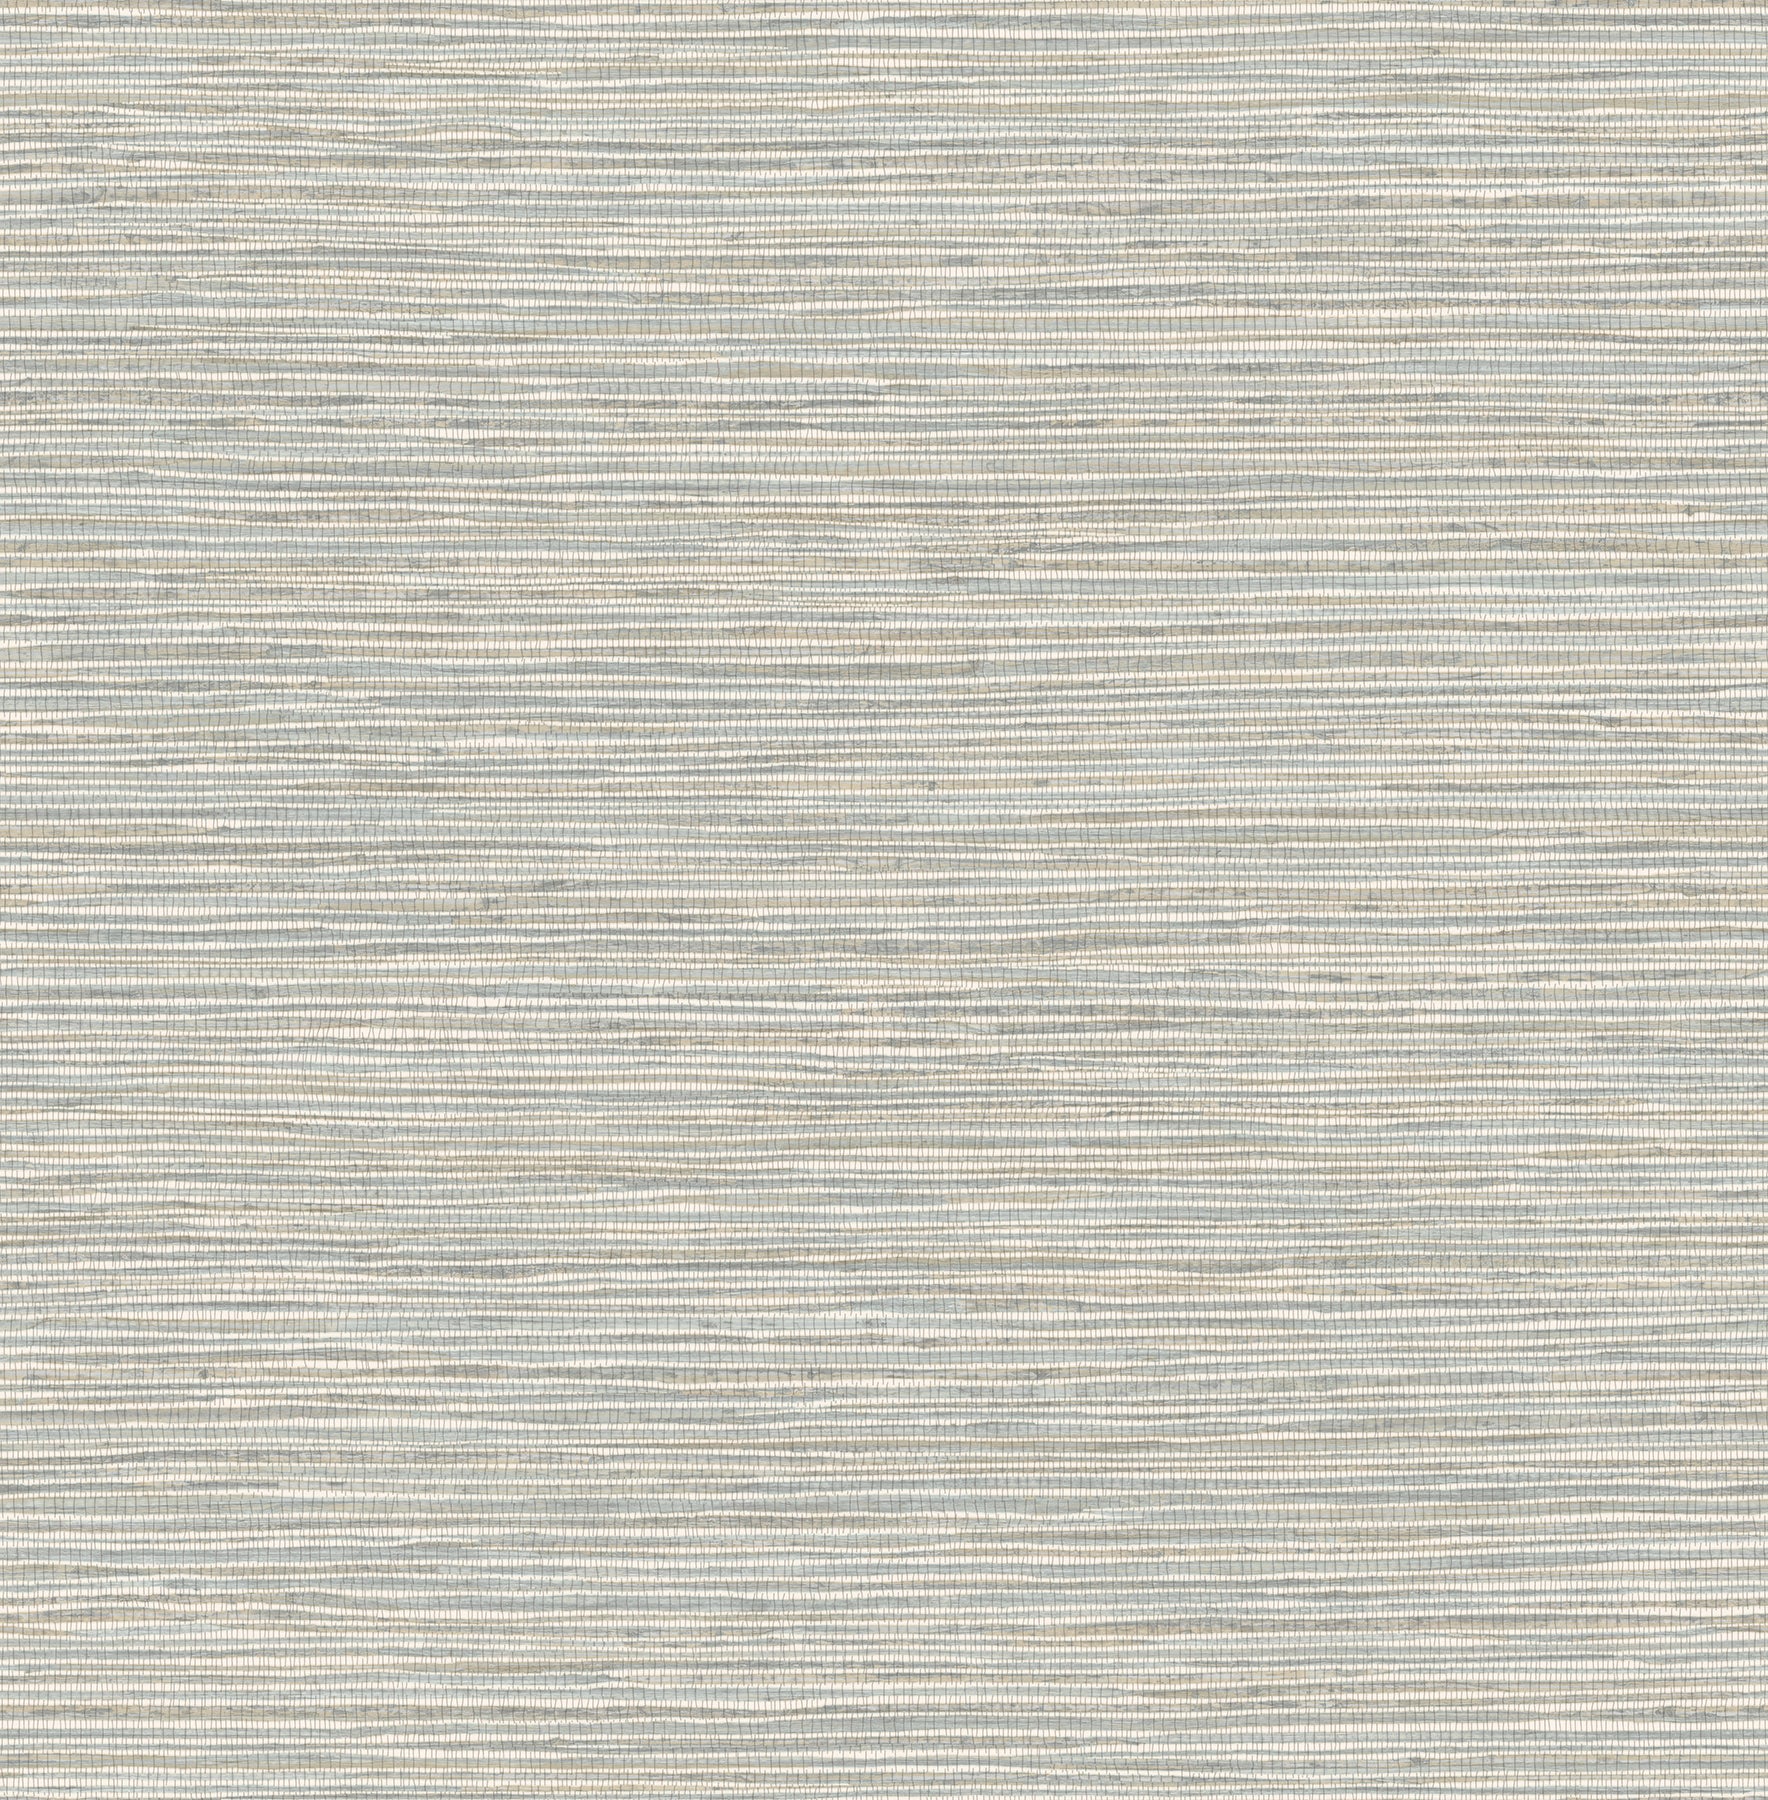 Dimensional Grasscloth Peel and Stick Wallpaper Peel and Stick Wallpaper RoomMates Roll Neutral Jade 